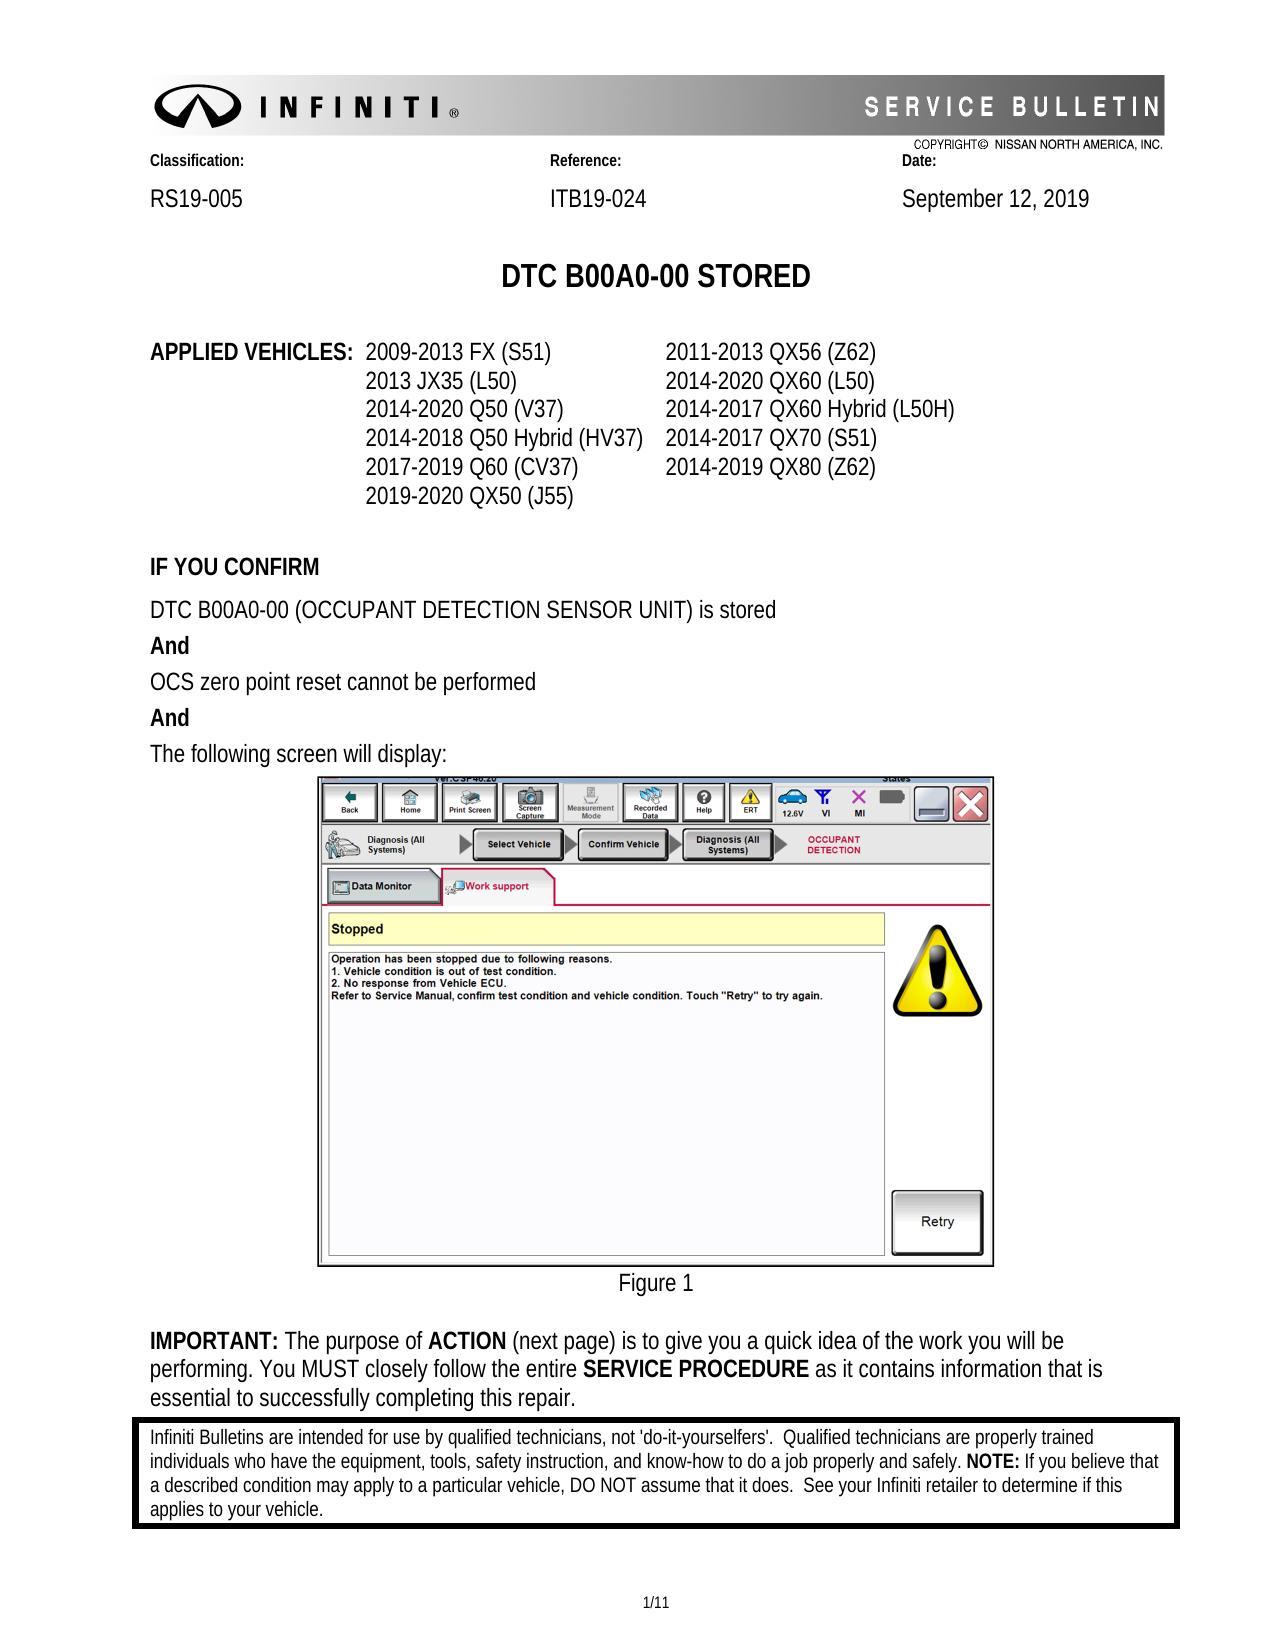 infiniti-service-bulletin-rs19-005-occupant-detection-sensor-unit-ocs-reprogramming.pdf